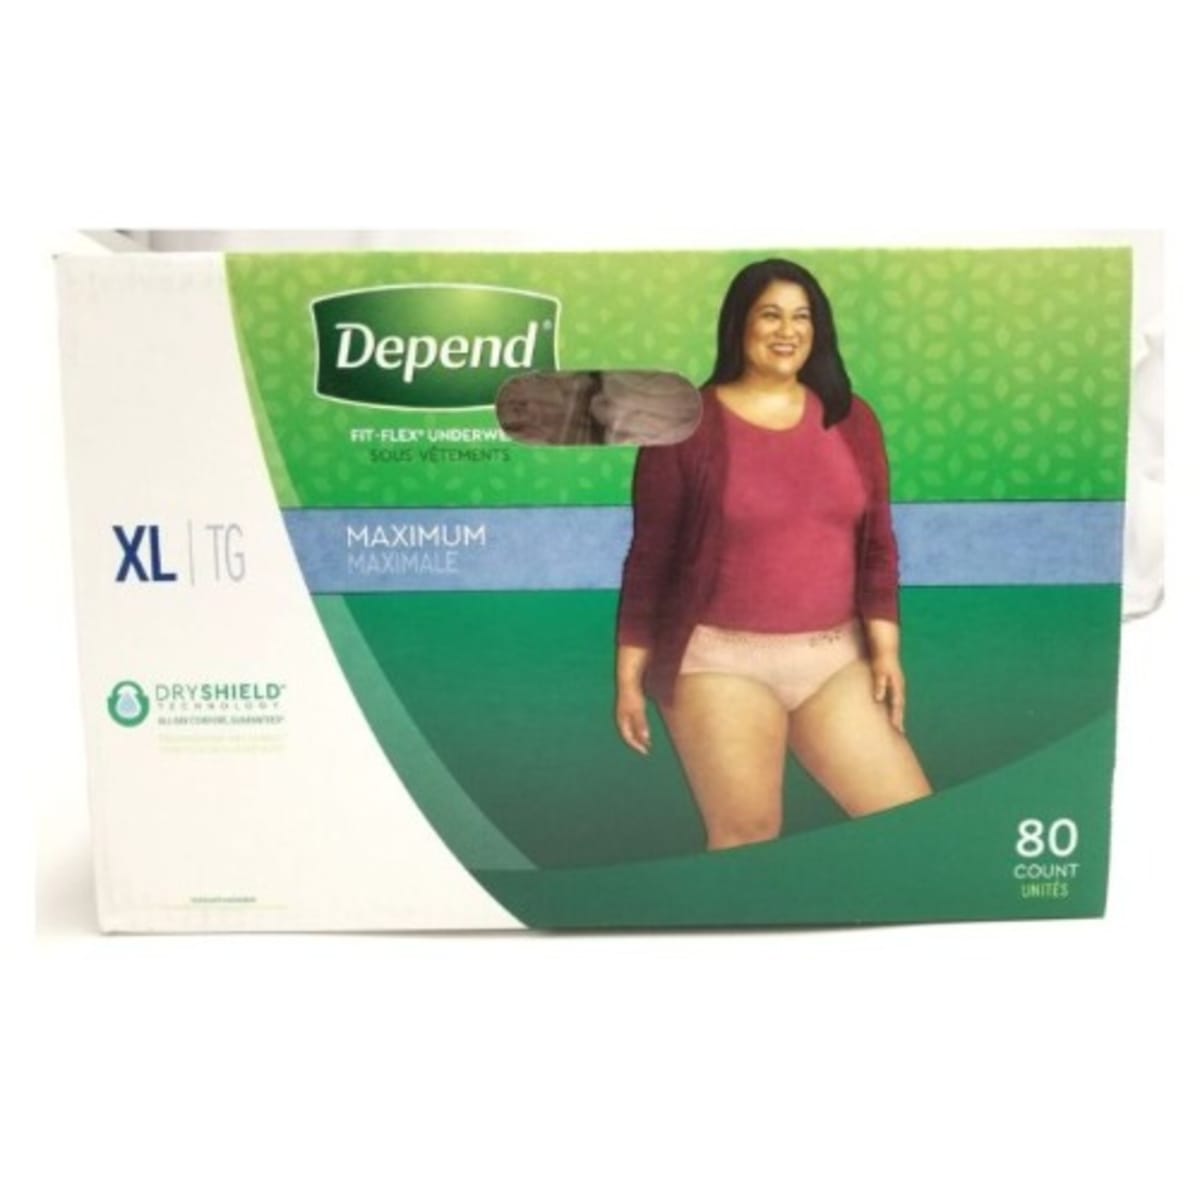 Depend Fit-flex Female Adult Absorbent Underwear Depend® FIT-FLEX